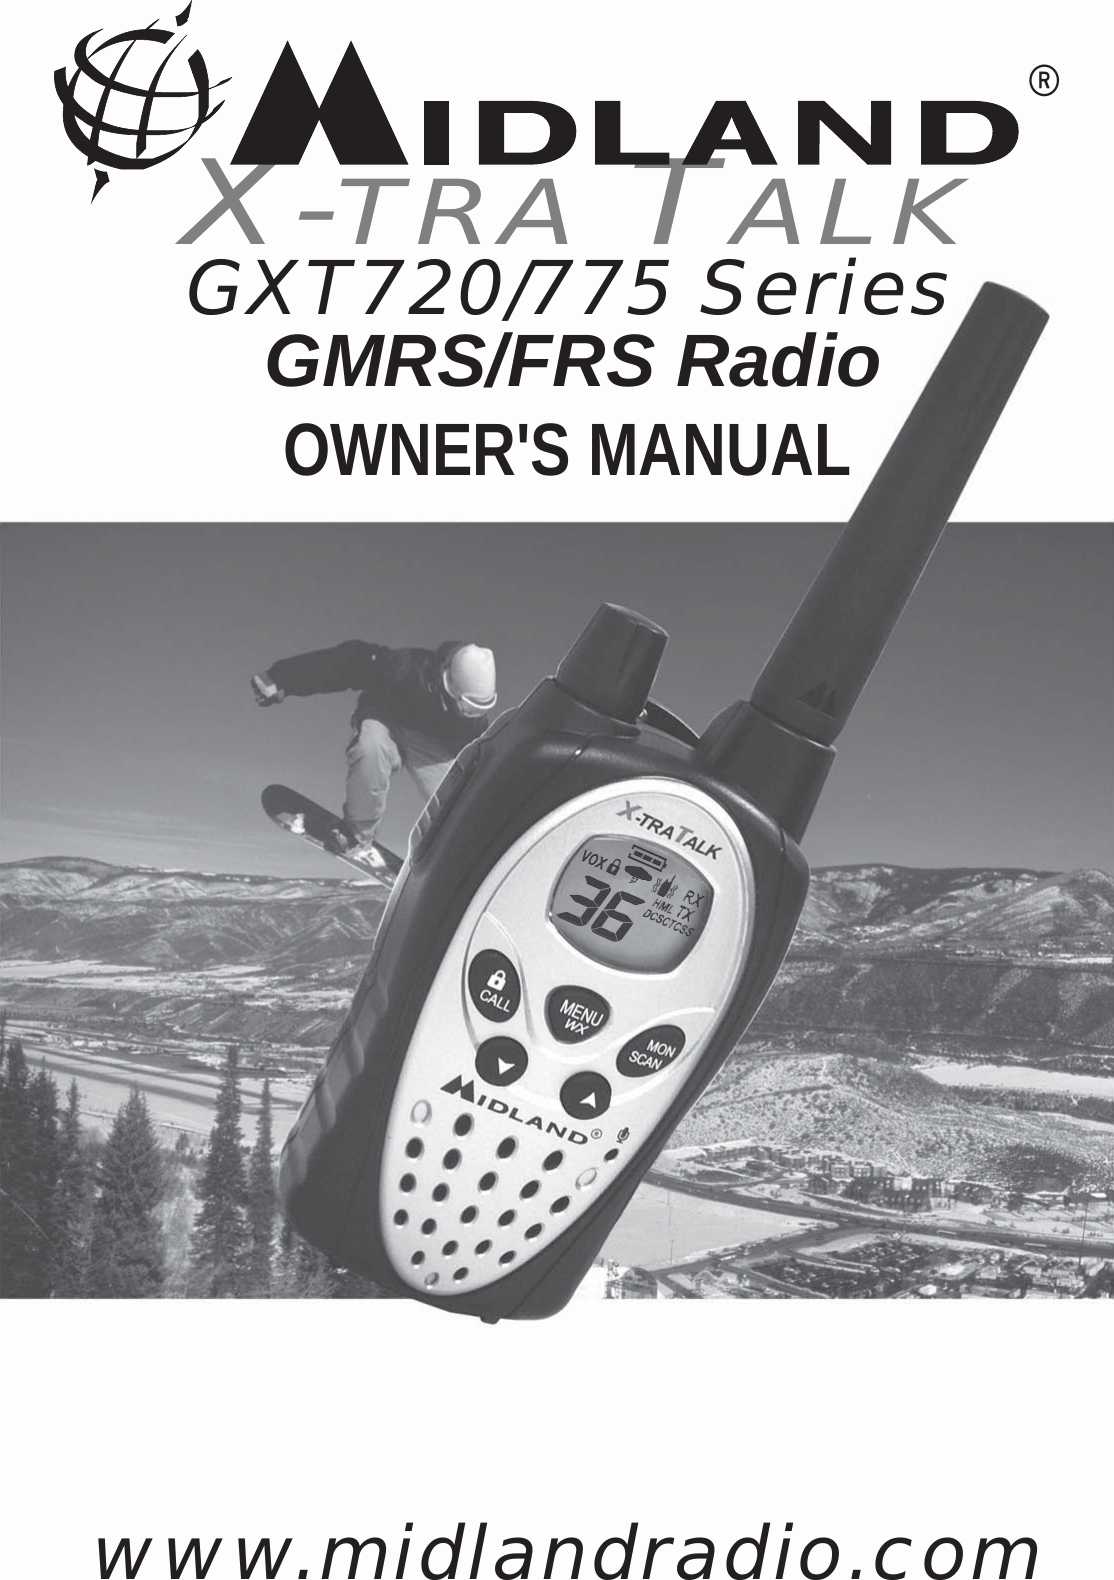  GXT720/775 Series      GMRS/FRS RadioX-TRA TALK®OWNER&apos;S MANUALwww.midlandradio.com